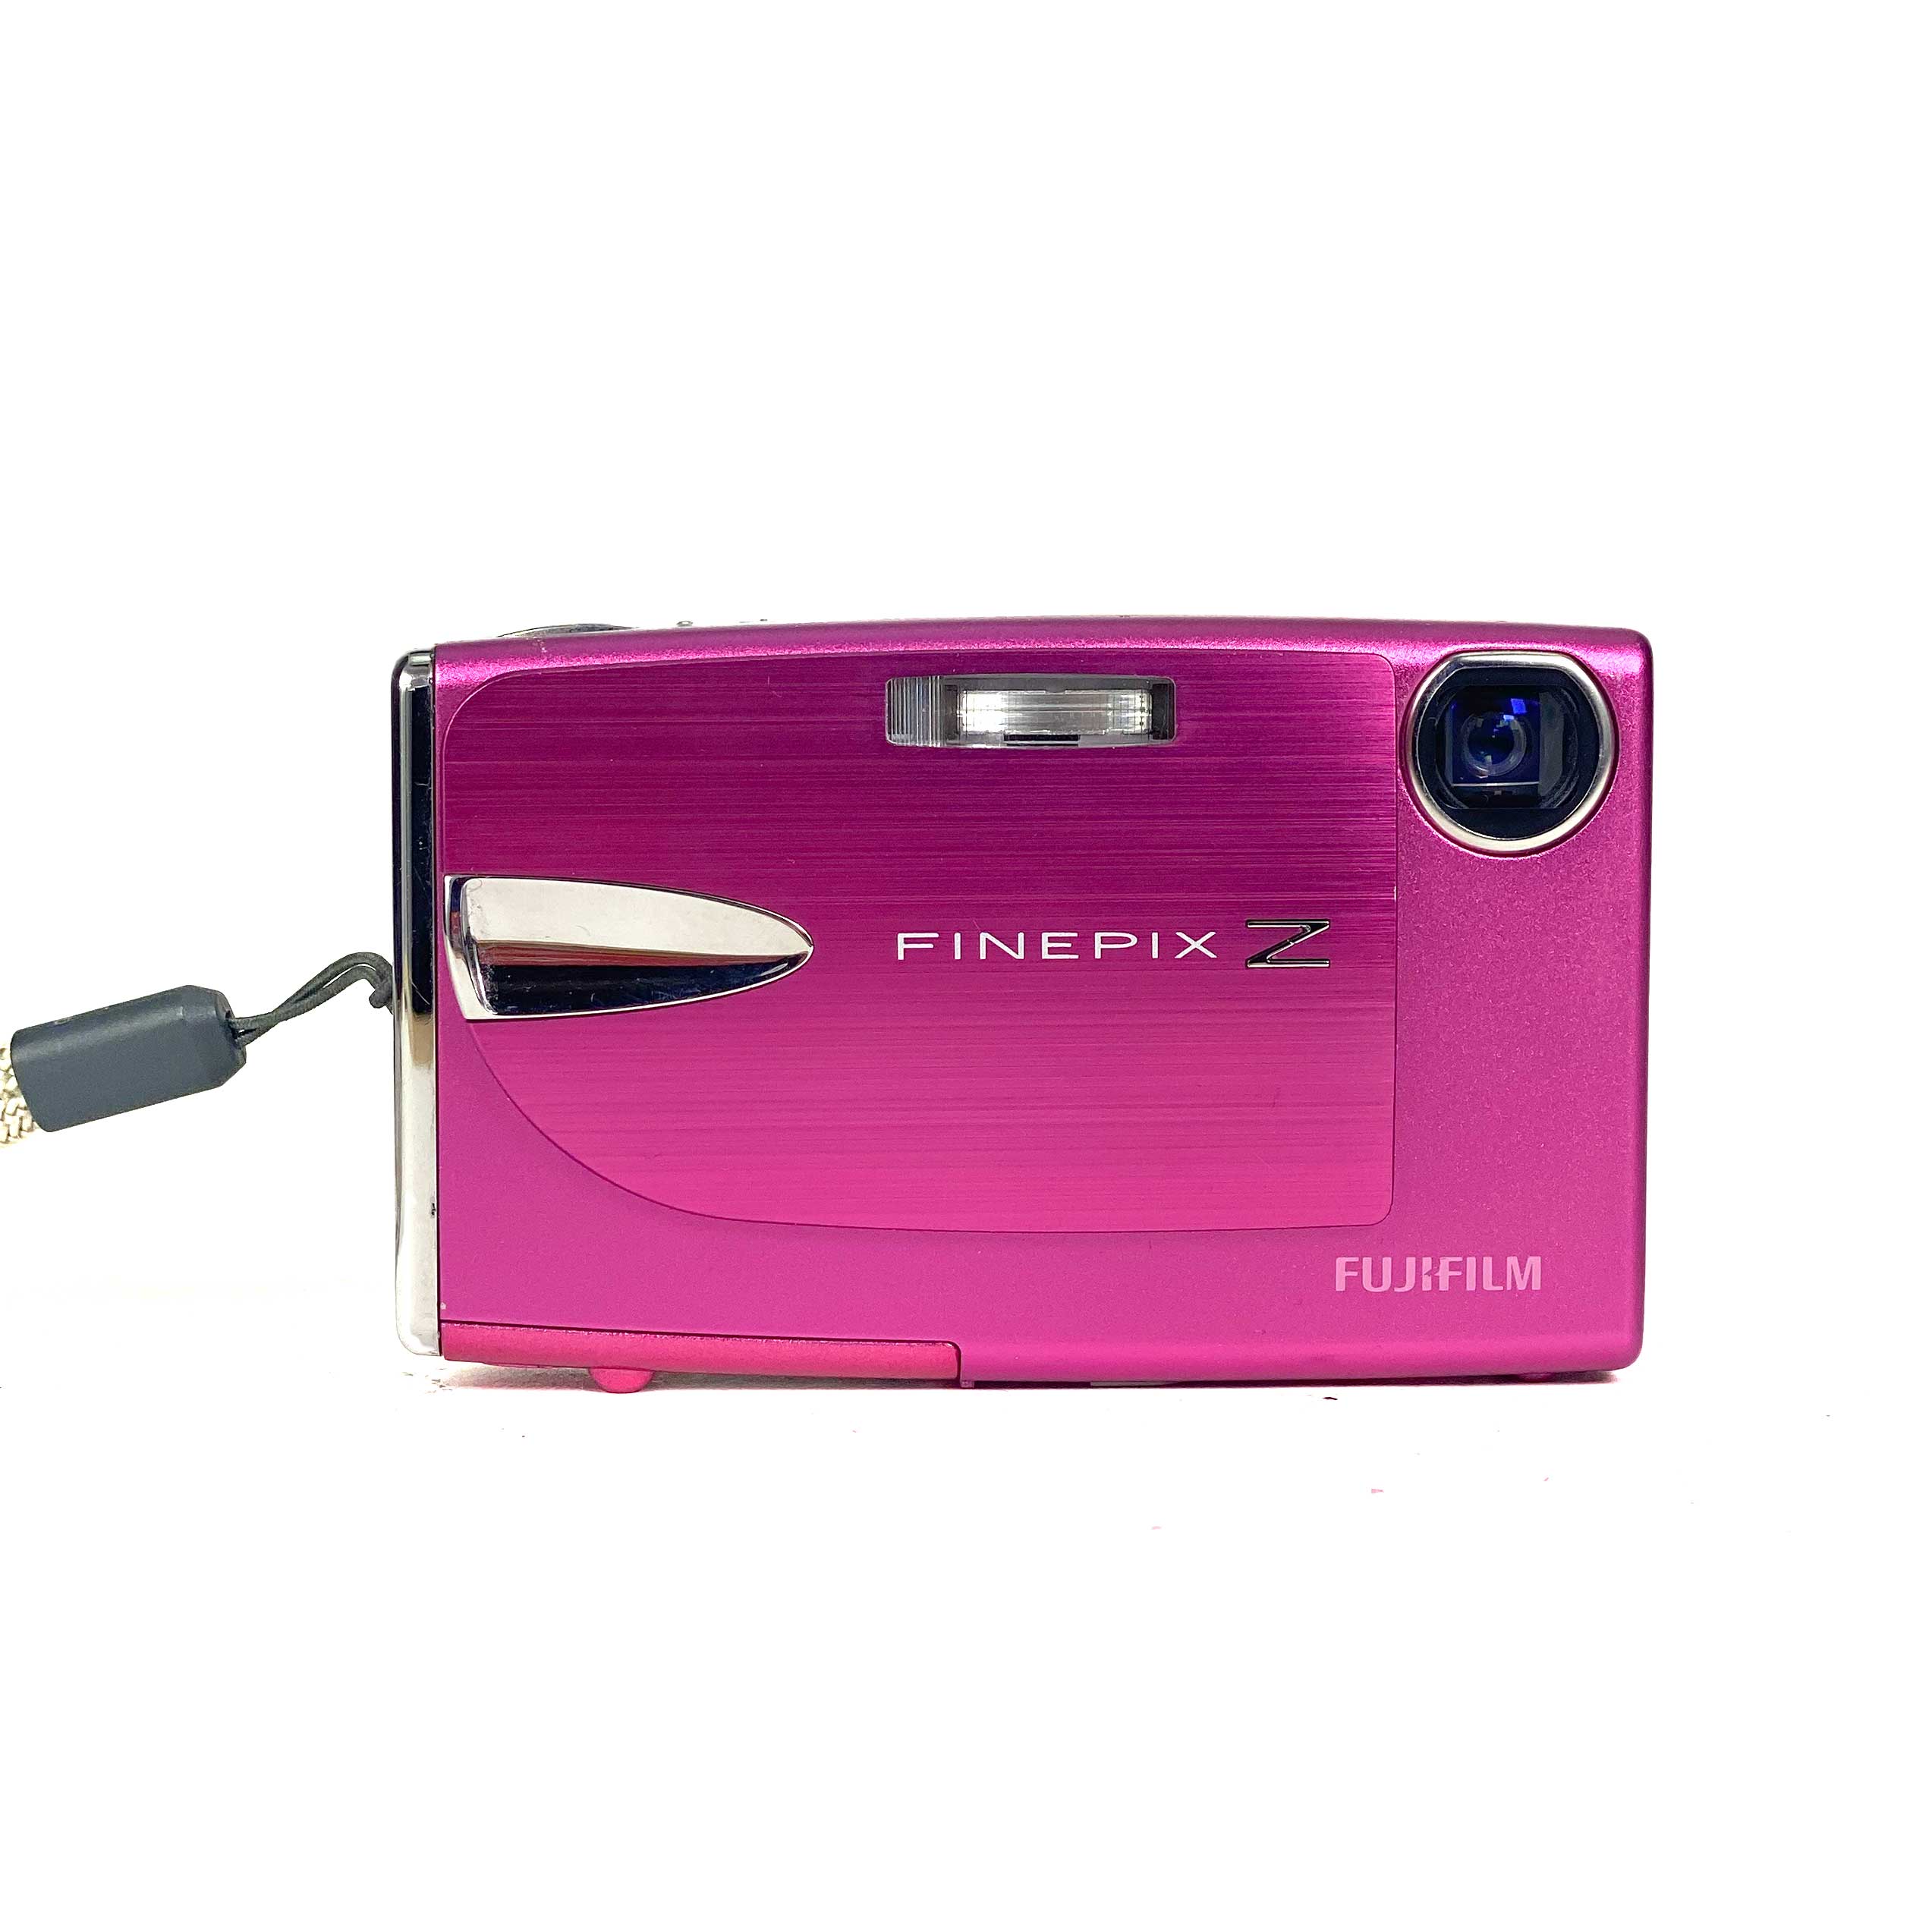 Fujifilm FinePix Z20 fd Digital Compact